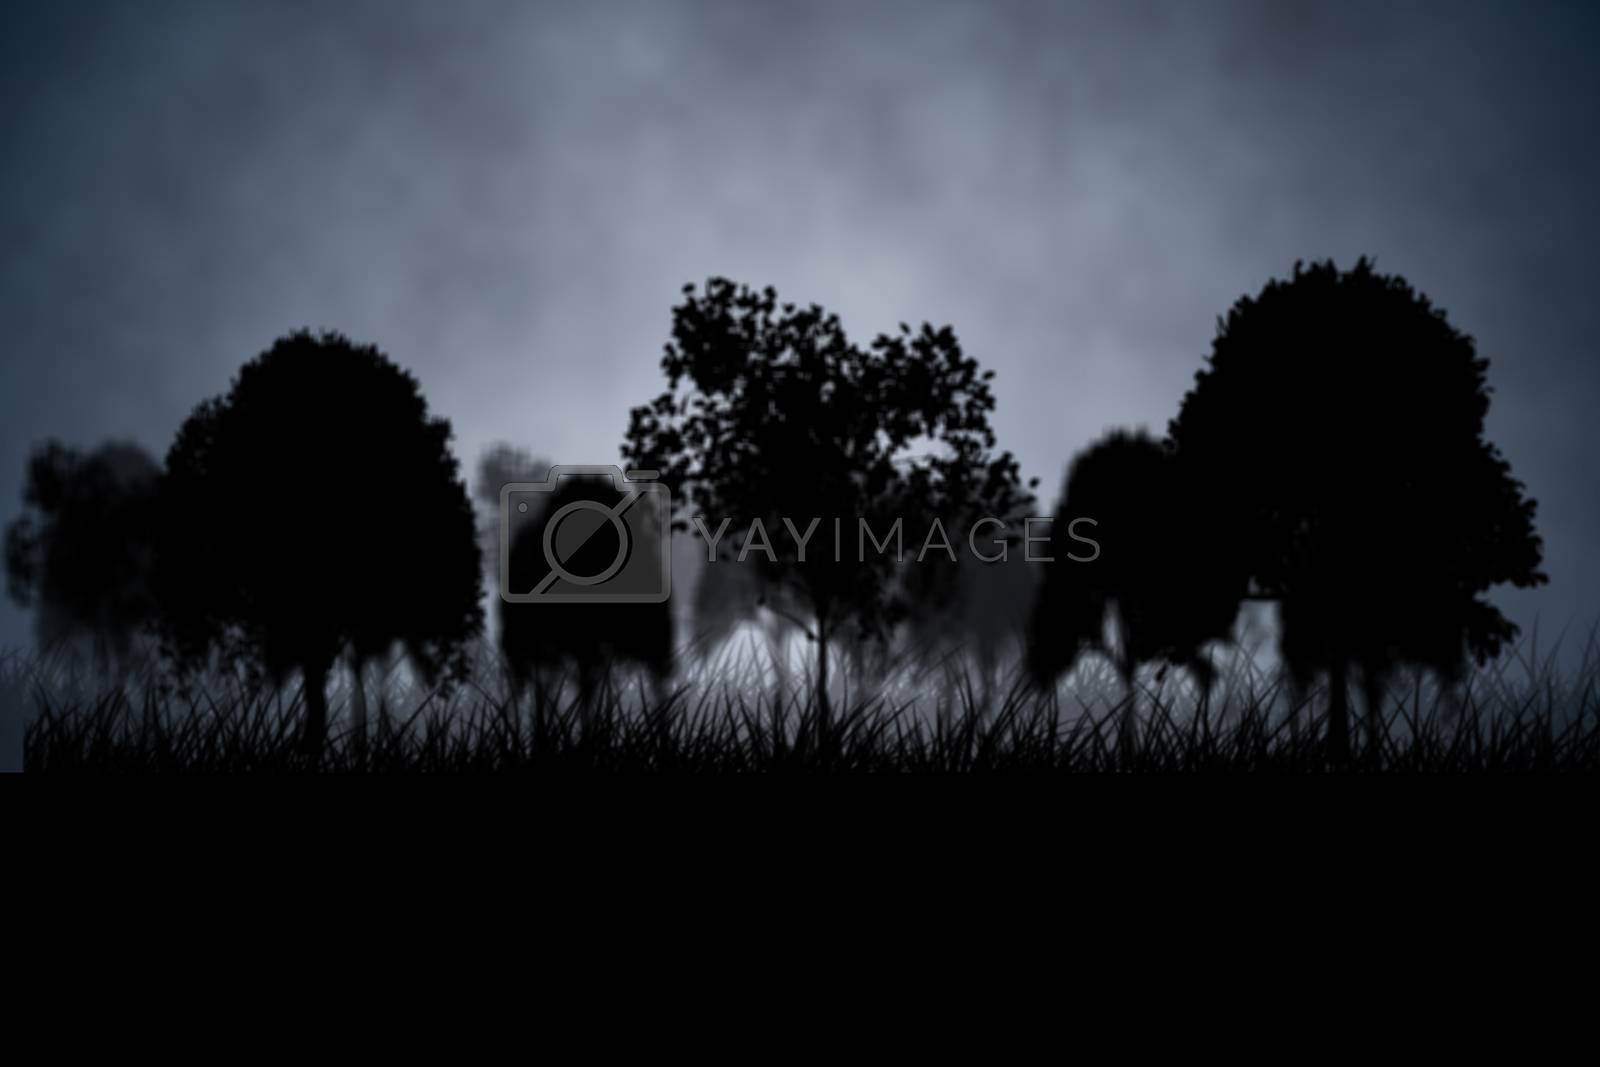 Royalty free image of Dark gothic scene with trees by Wavebreakmedia